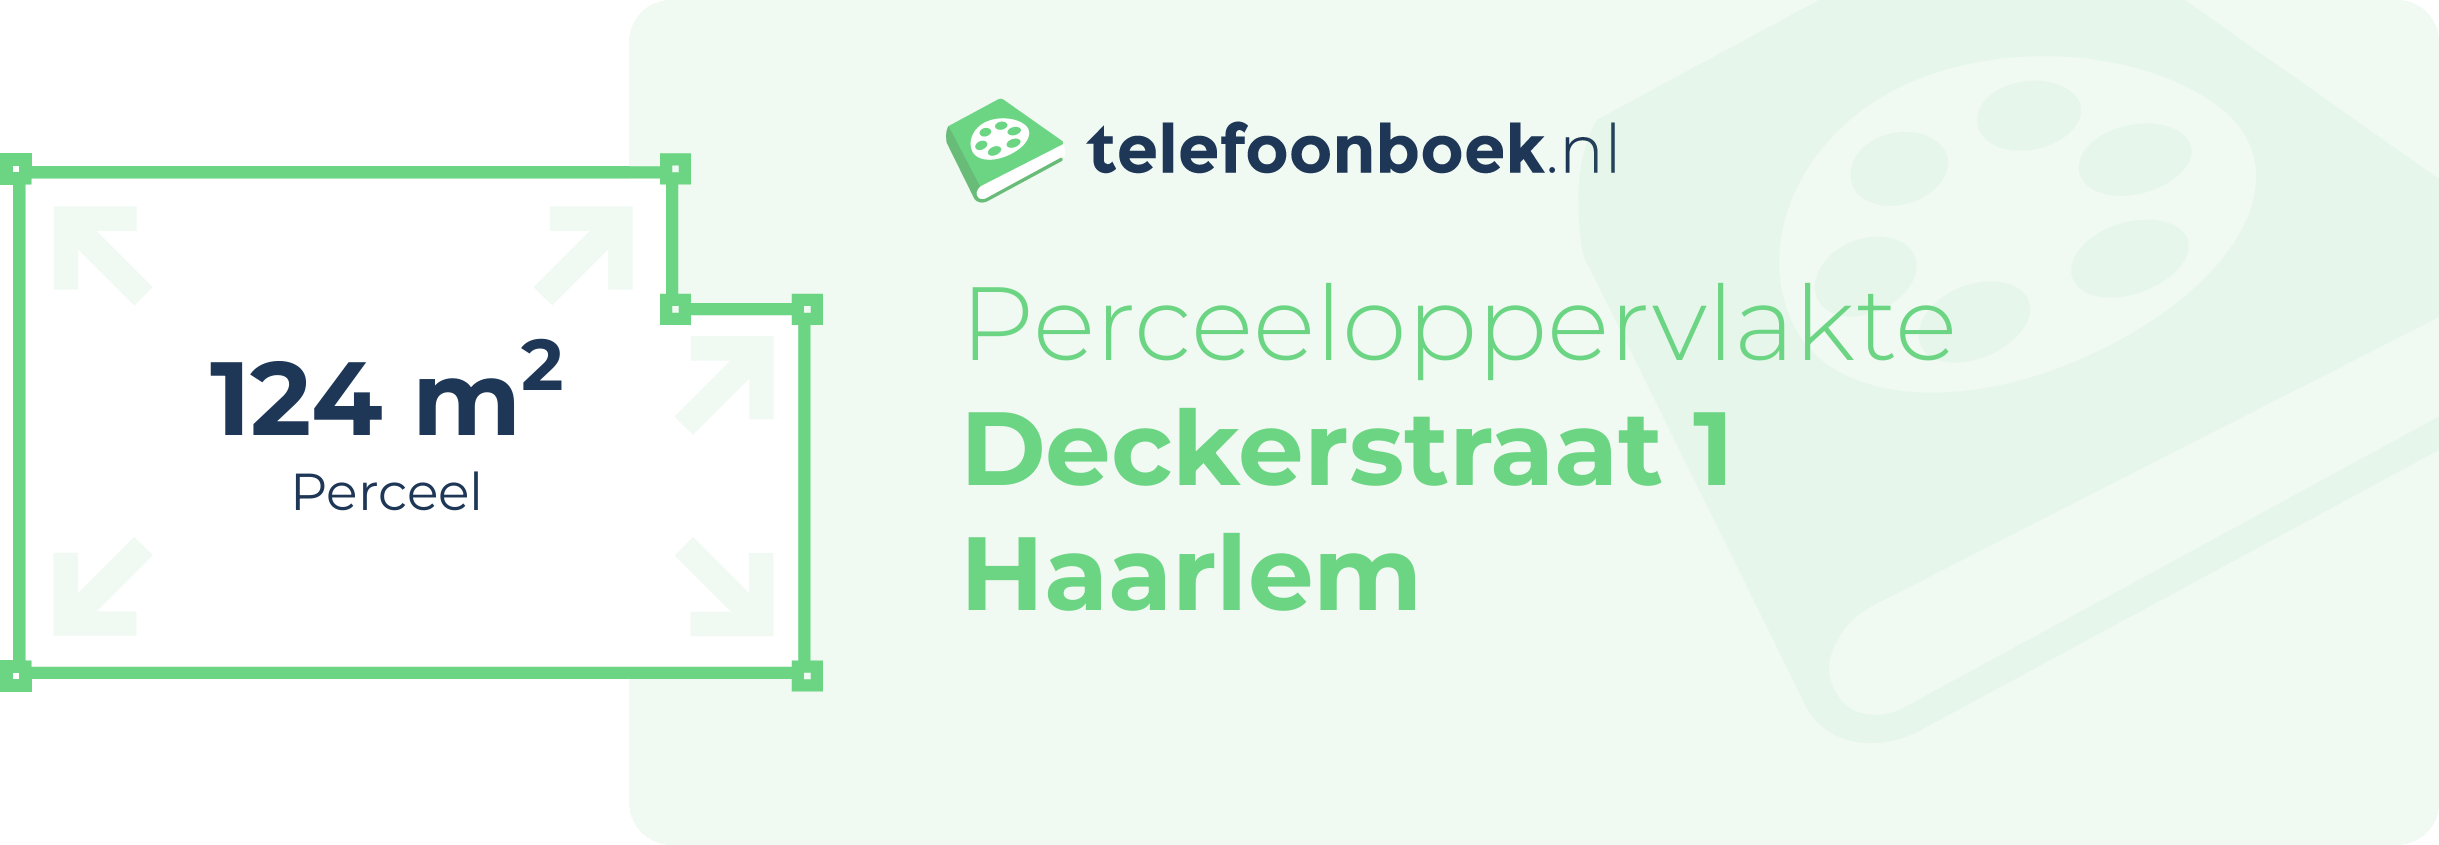 Perceeloppervlakte Deckerstraat 1 Haarlem